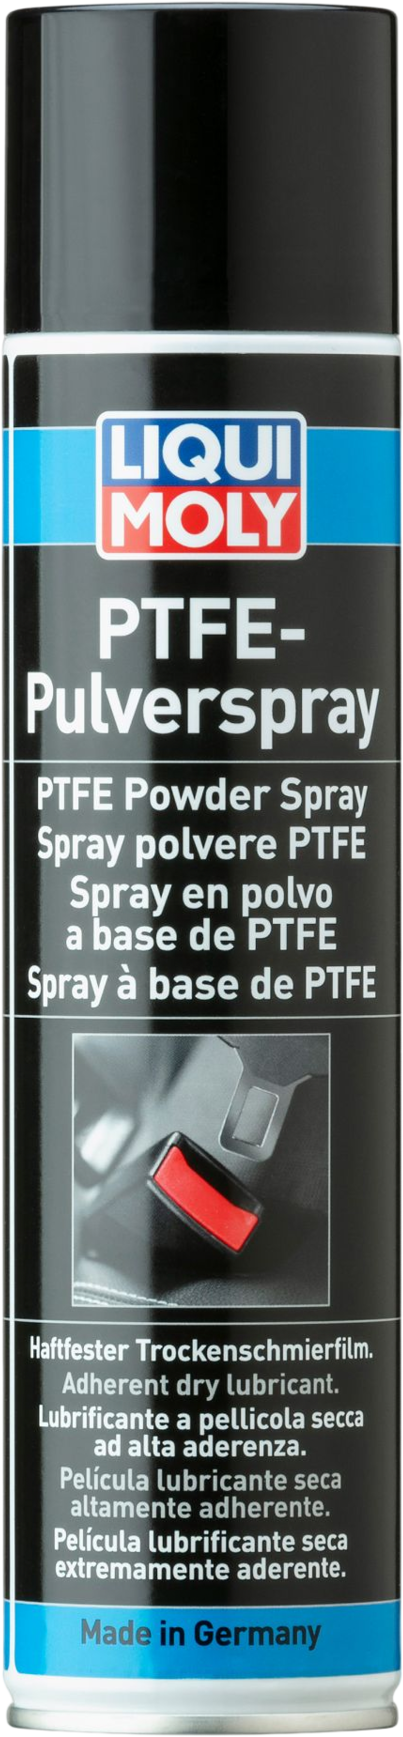 Liqui Moly PTFE-poederspray, 12 x 400 ml detail 2